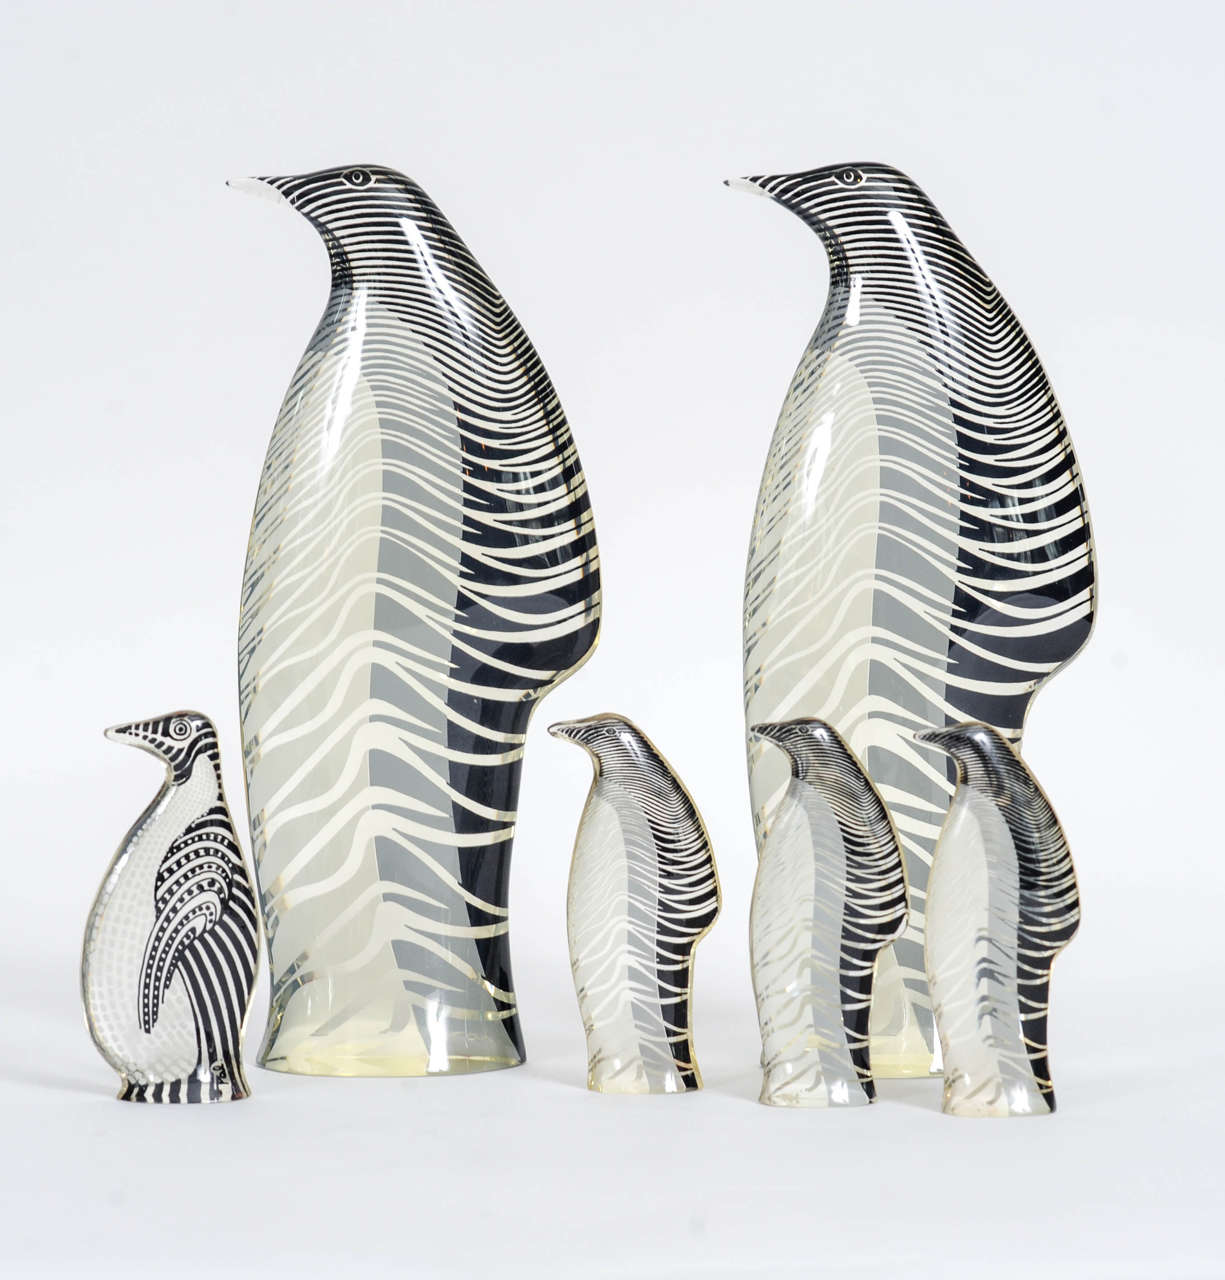 Brazilian Set of Six Lucite Penguins Designed by Abraham Palatnik